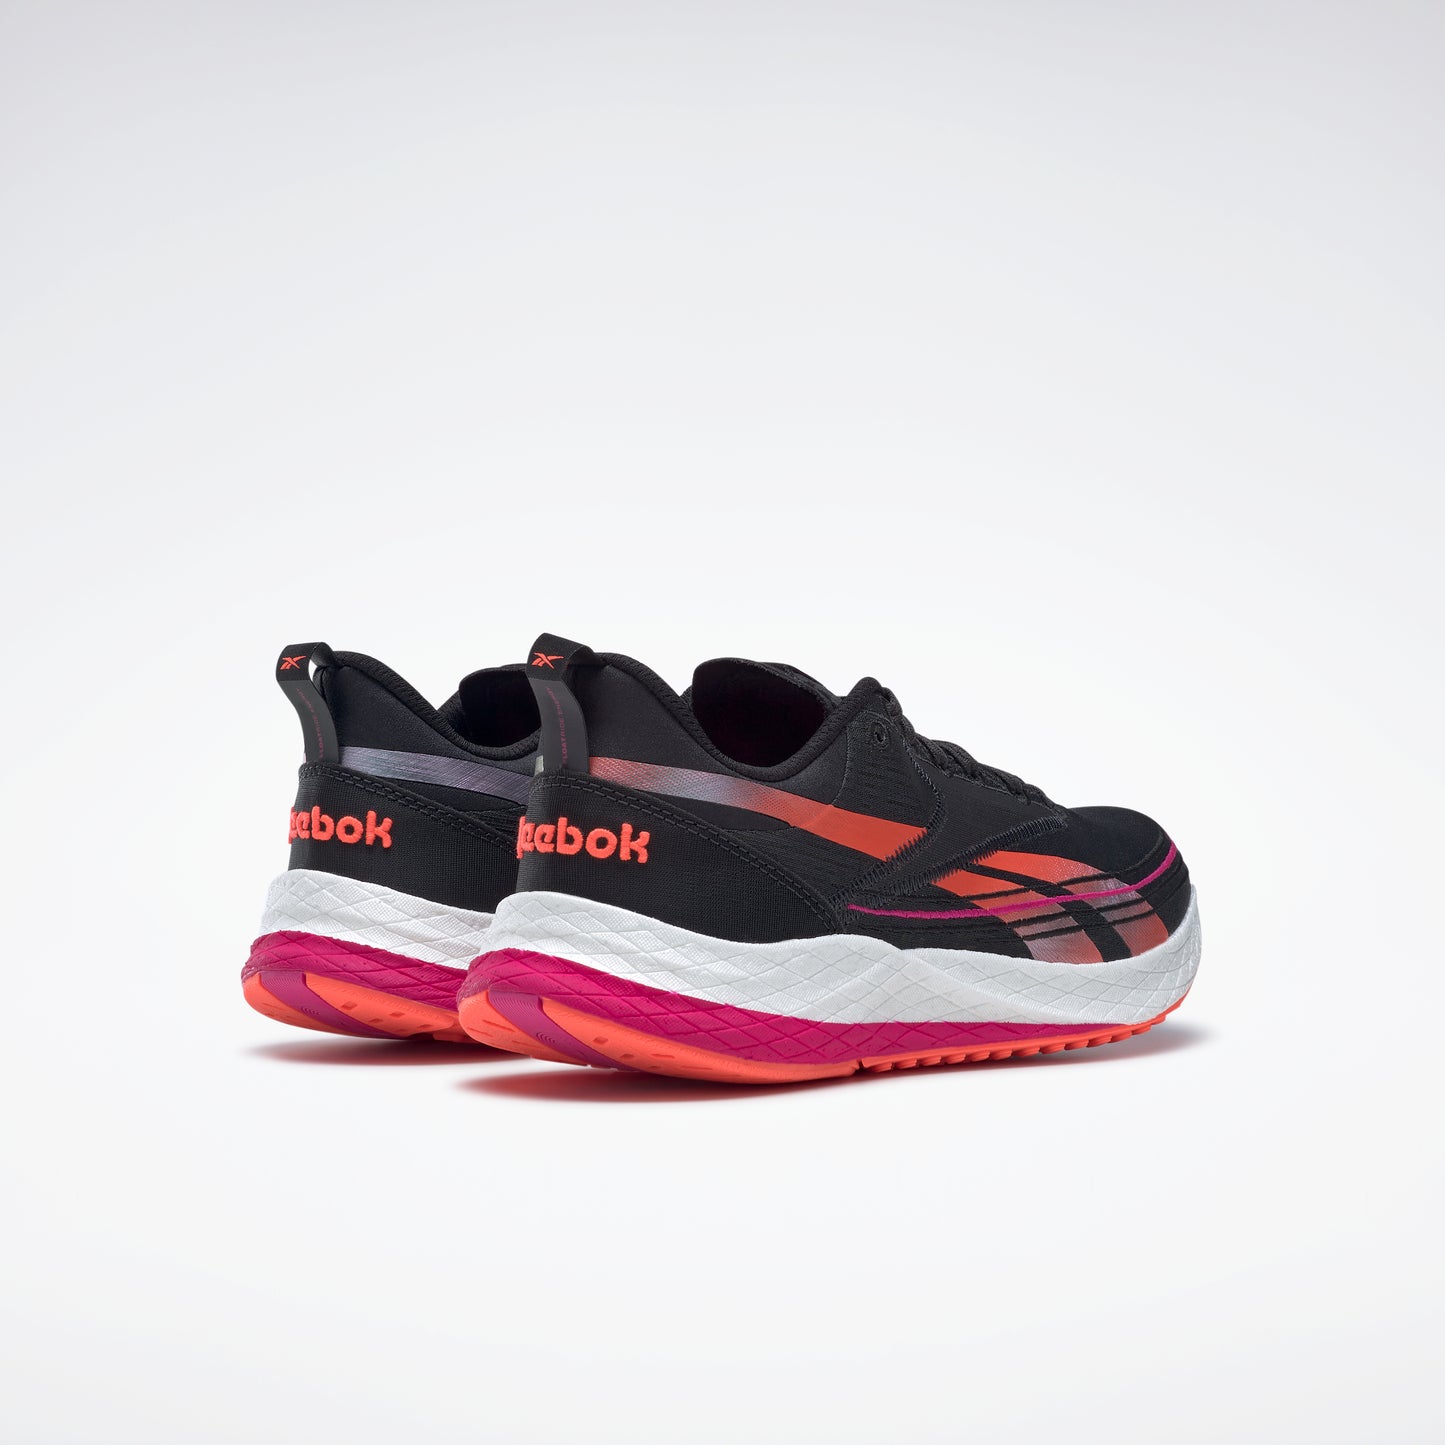 Reebok Footwear Chaussures Floatride Energy 4 pour femmes Cblack/Propnk/Orgfla